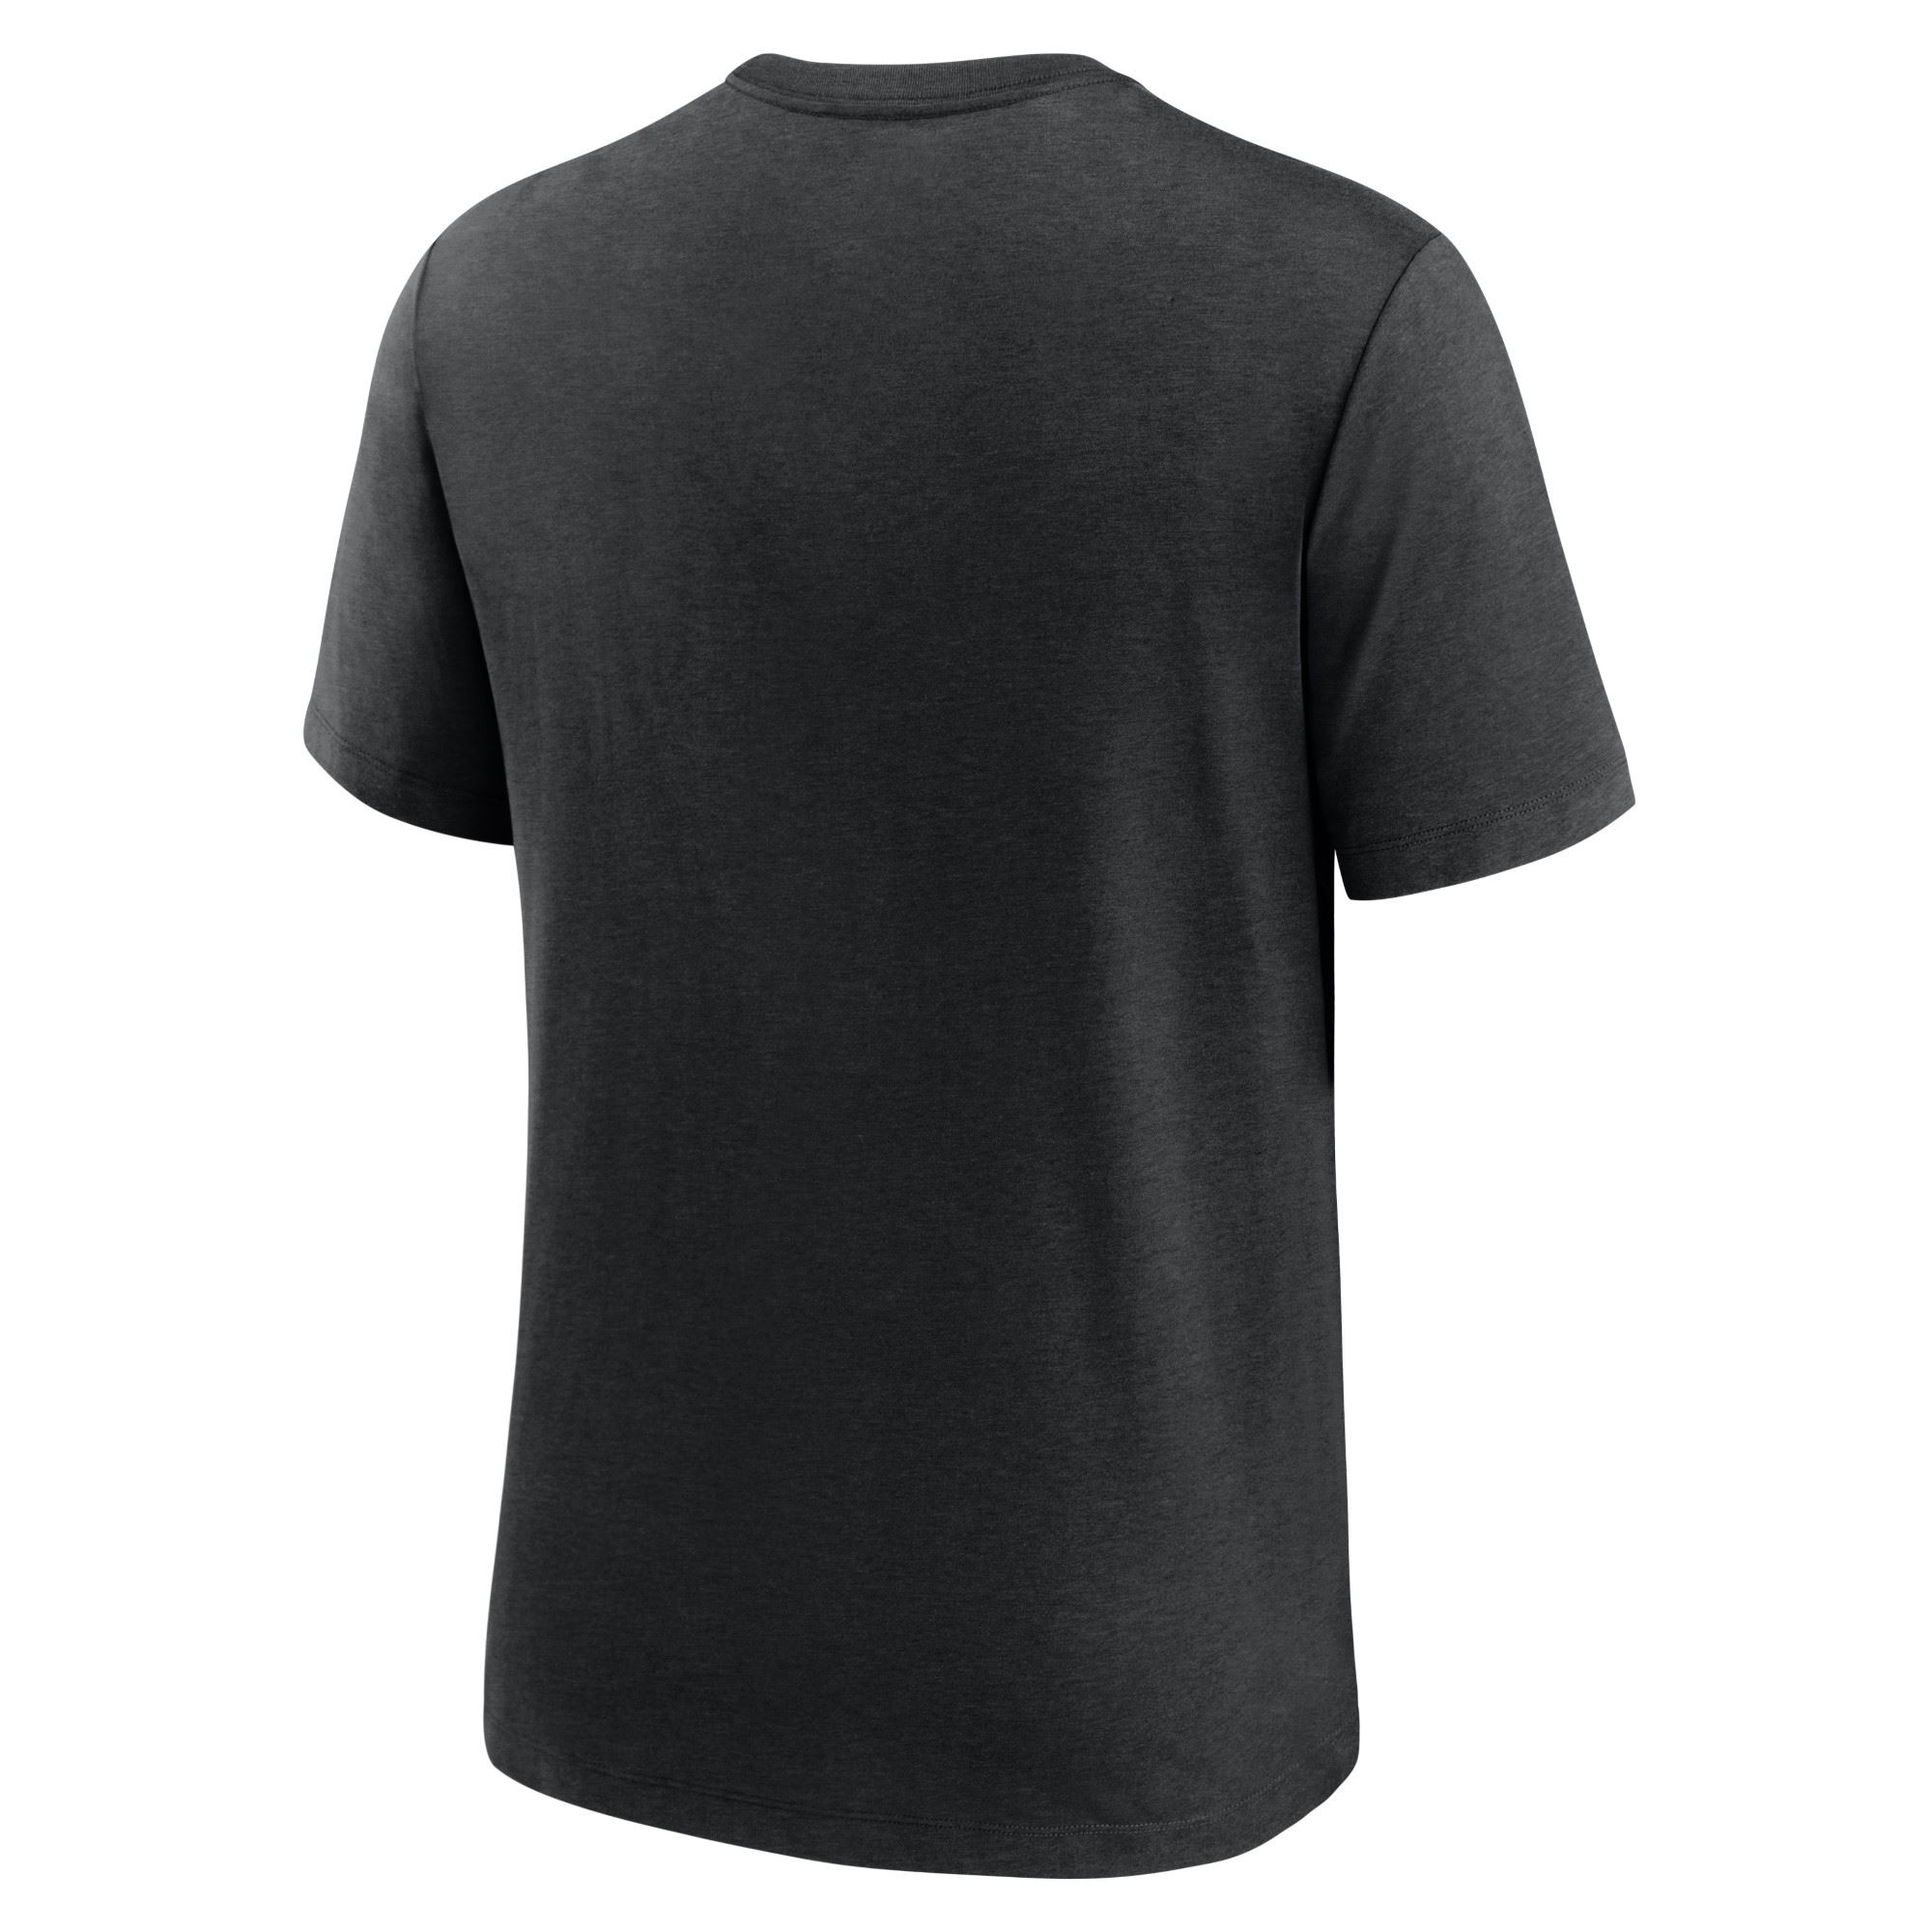 Philadelphia Eagles NFL Triblend Team Name Black Heather T-Shirt Nike